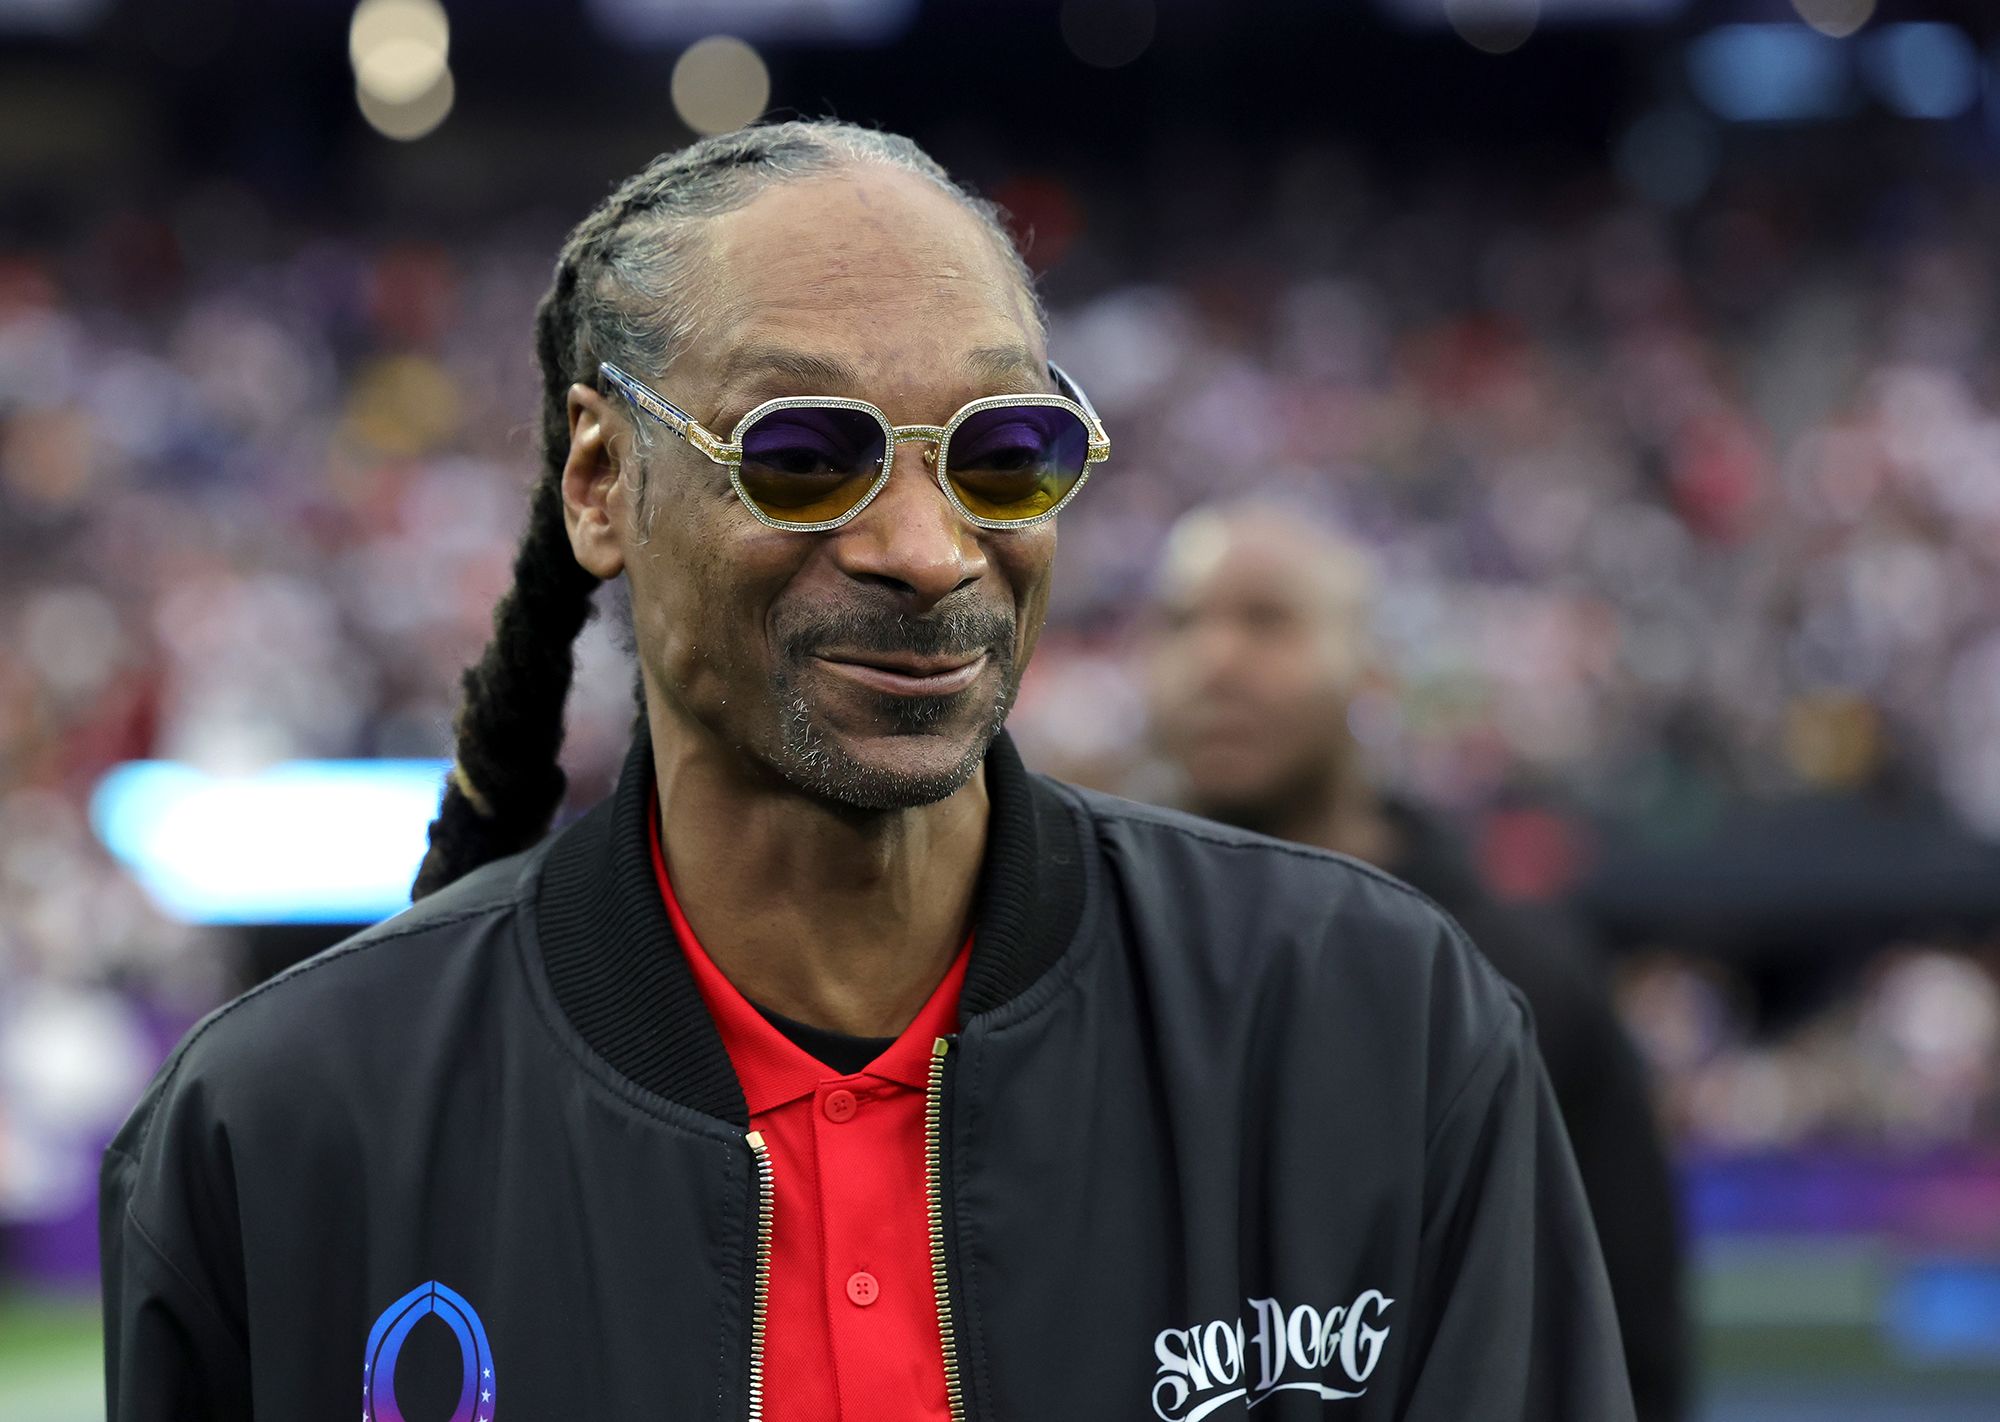 Video: Snoop Dogg enters bidding war for NHL team against Ryan Reynolds